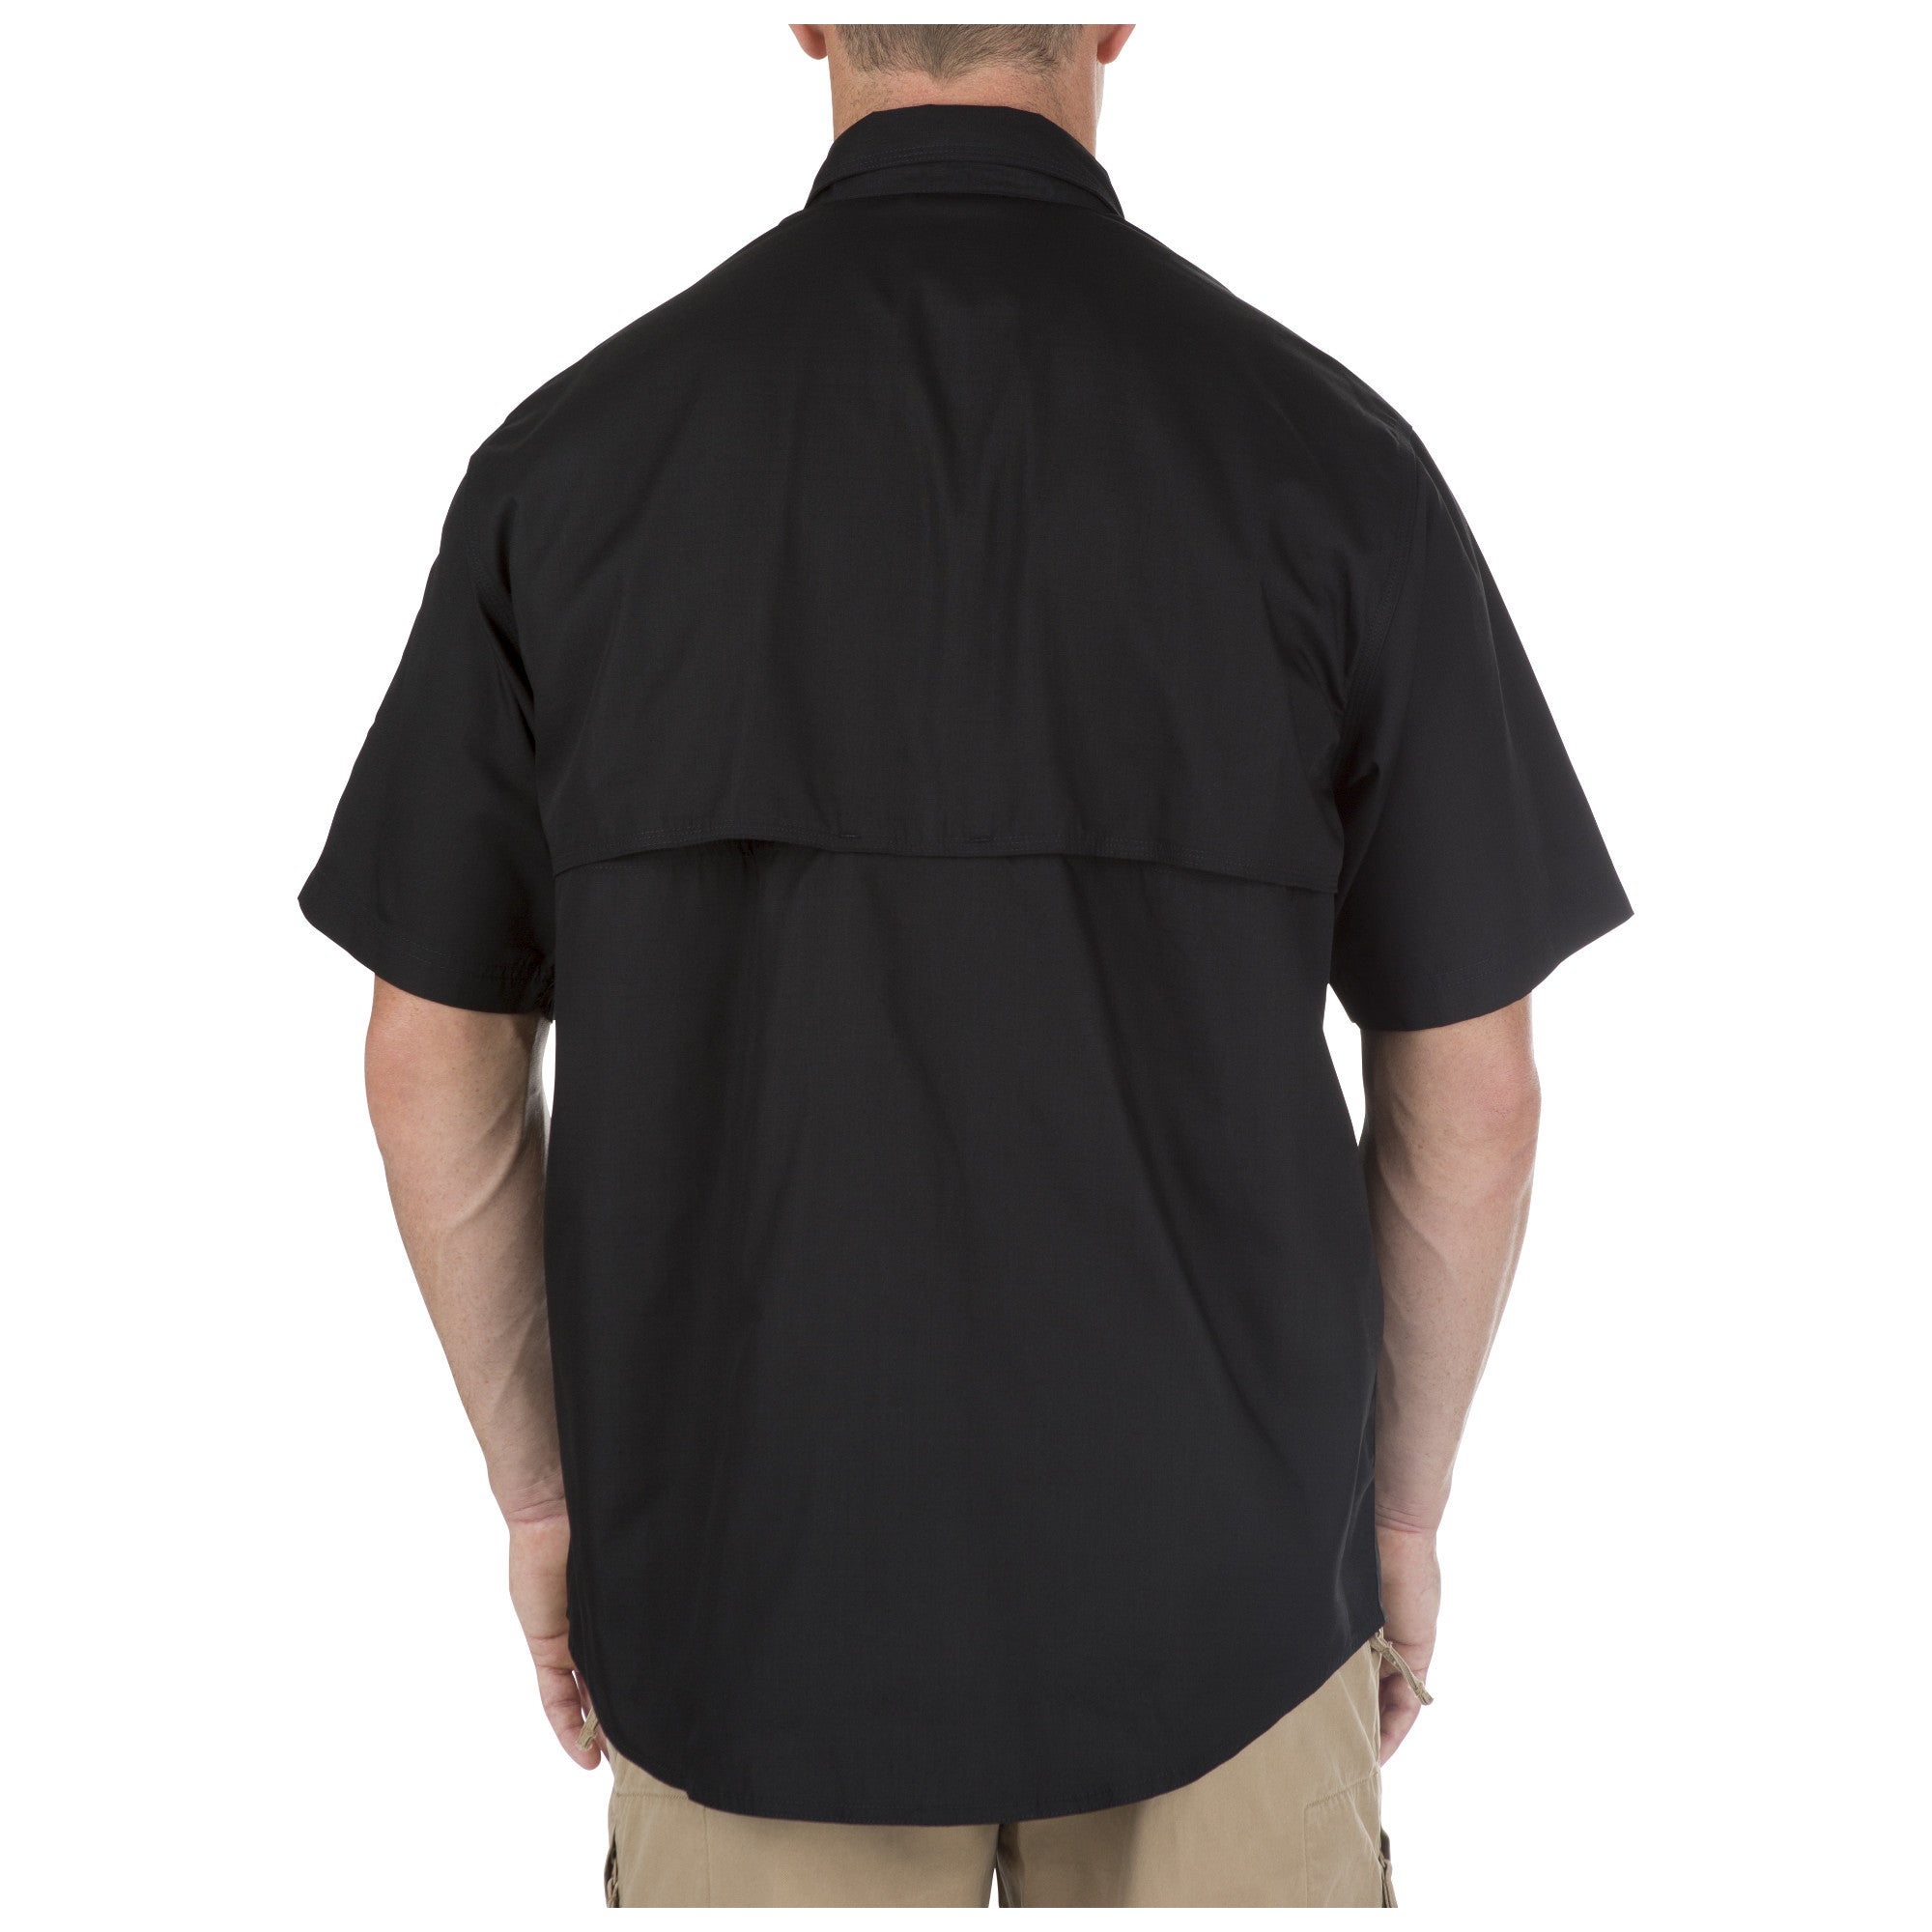 5.11 Tactical Taclite Pro Short Sleeve Shirt Tactical Gear Australia Supplier Distributor Dealer